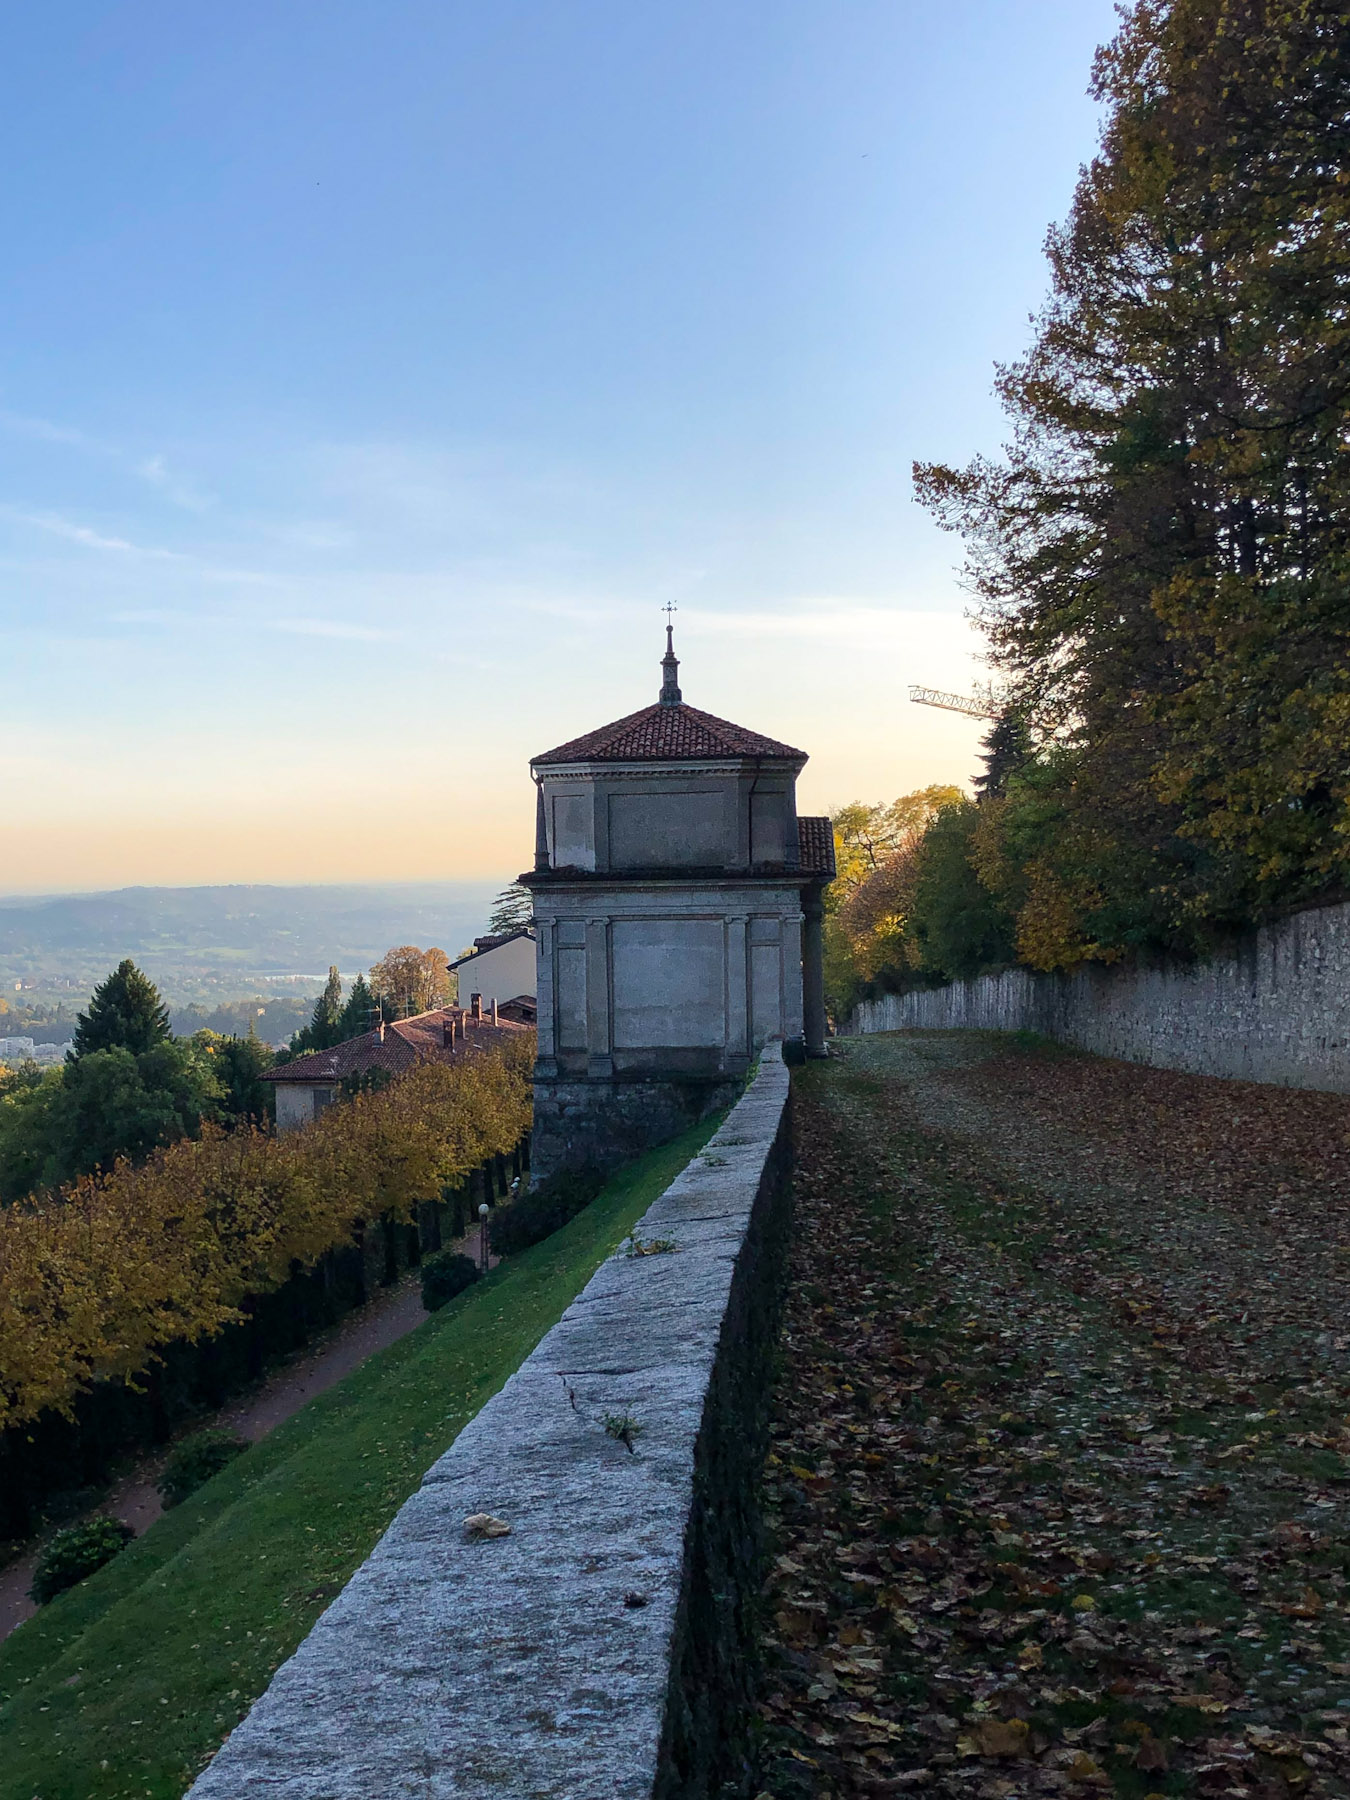 Seconda Cappella, Sacro Monte di Varese, Italy